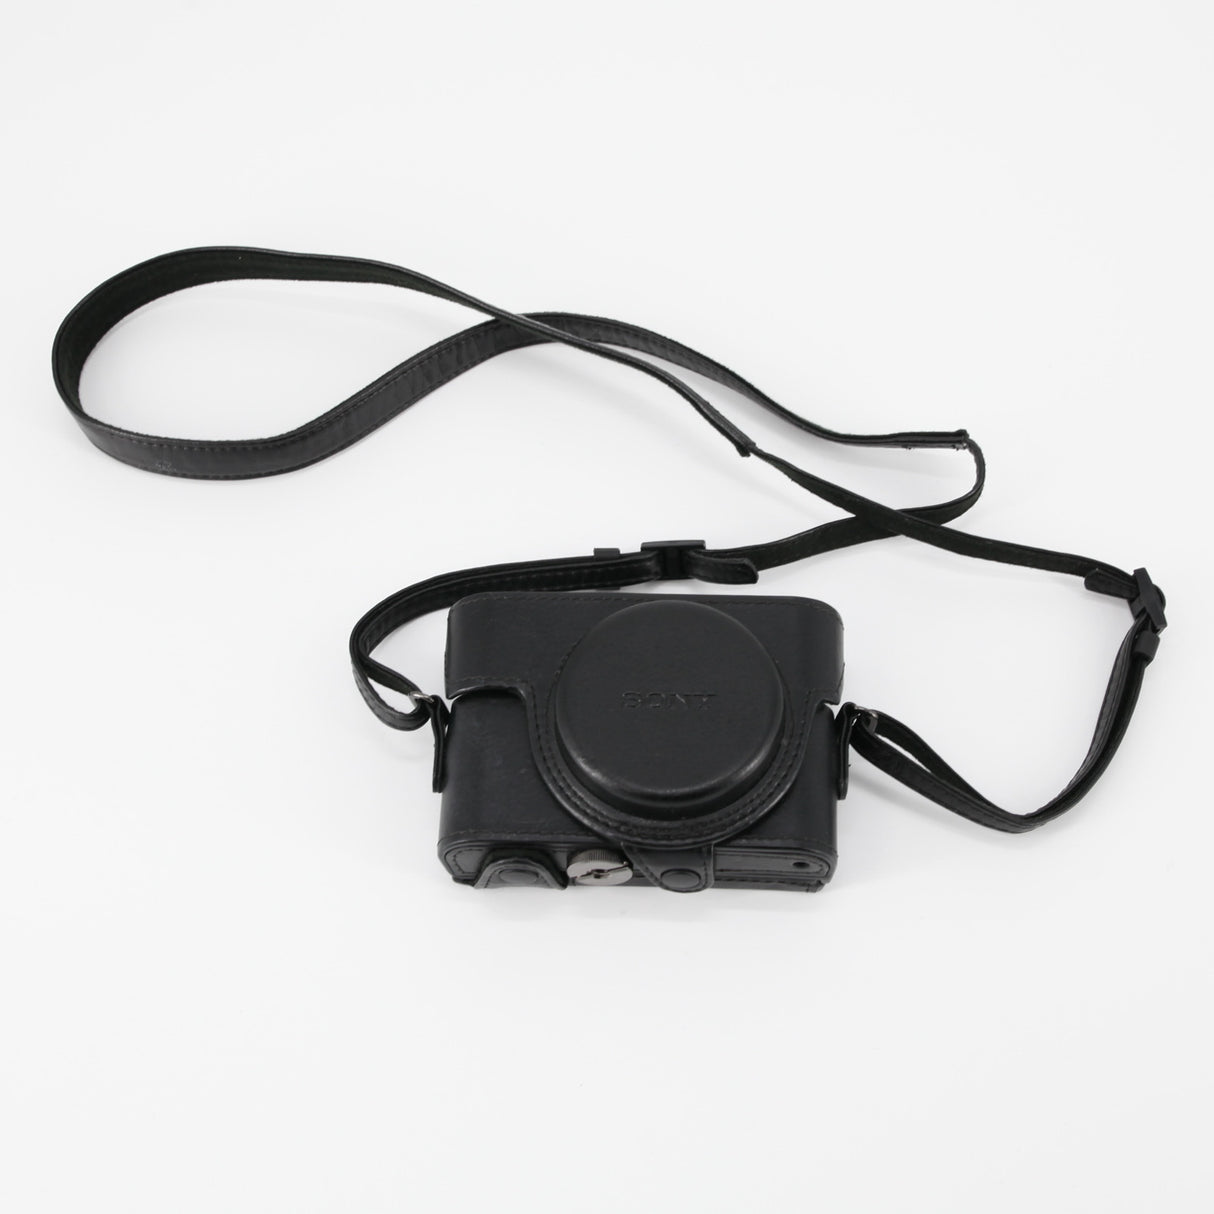 Sony Cyber-shot DSC RX100 III Compact Camera, 20.1 MP, 4K Photos, Warranty - GreenGreenStoreUK